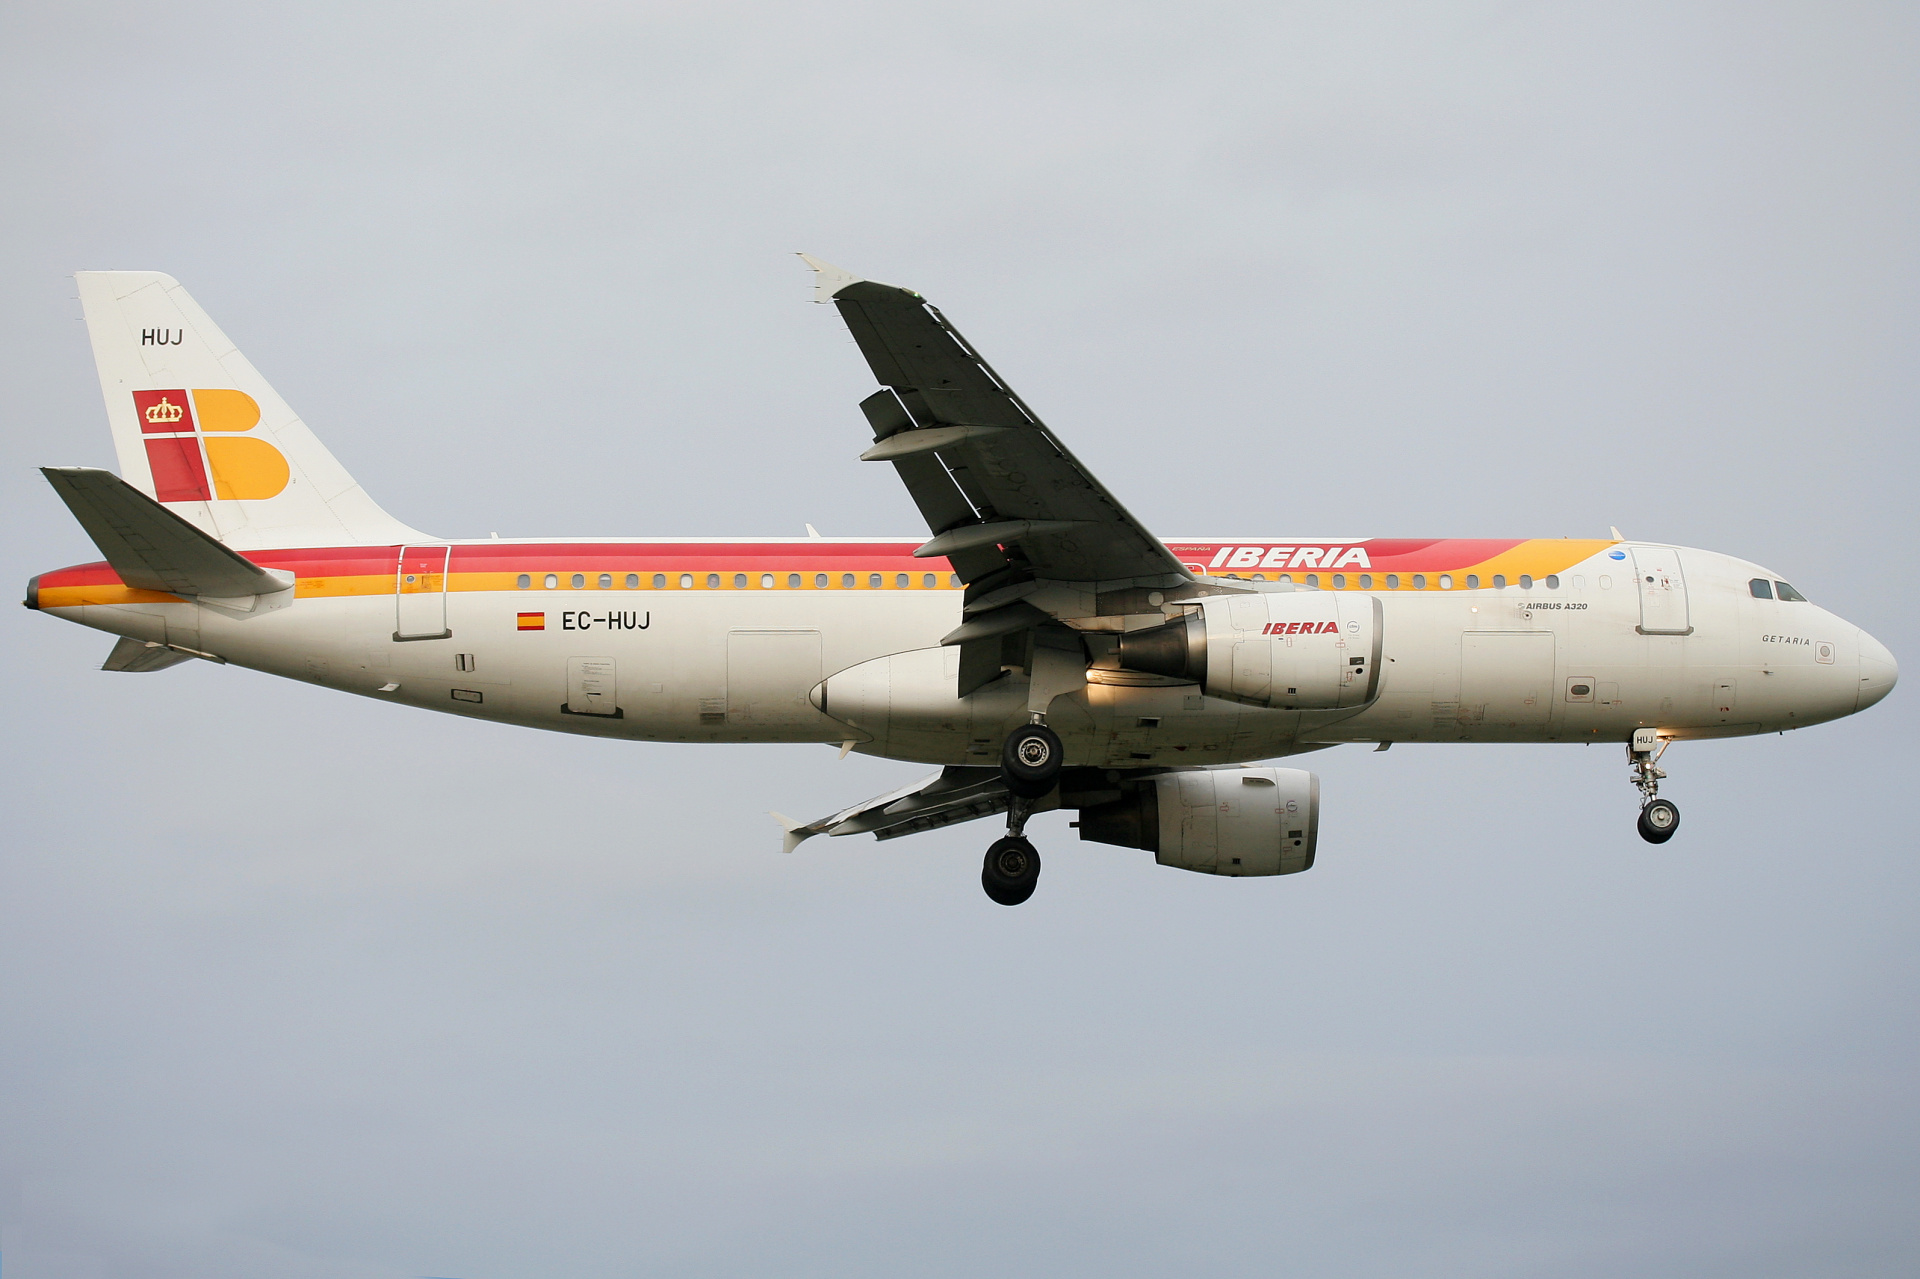 EC-HUJ (Aircraft » EPWA Spotting » Airbus A320-200 » Iberia)